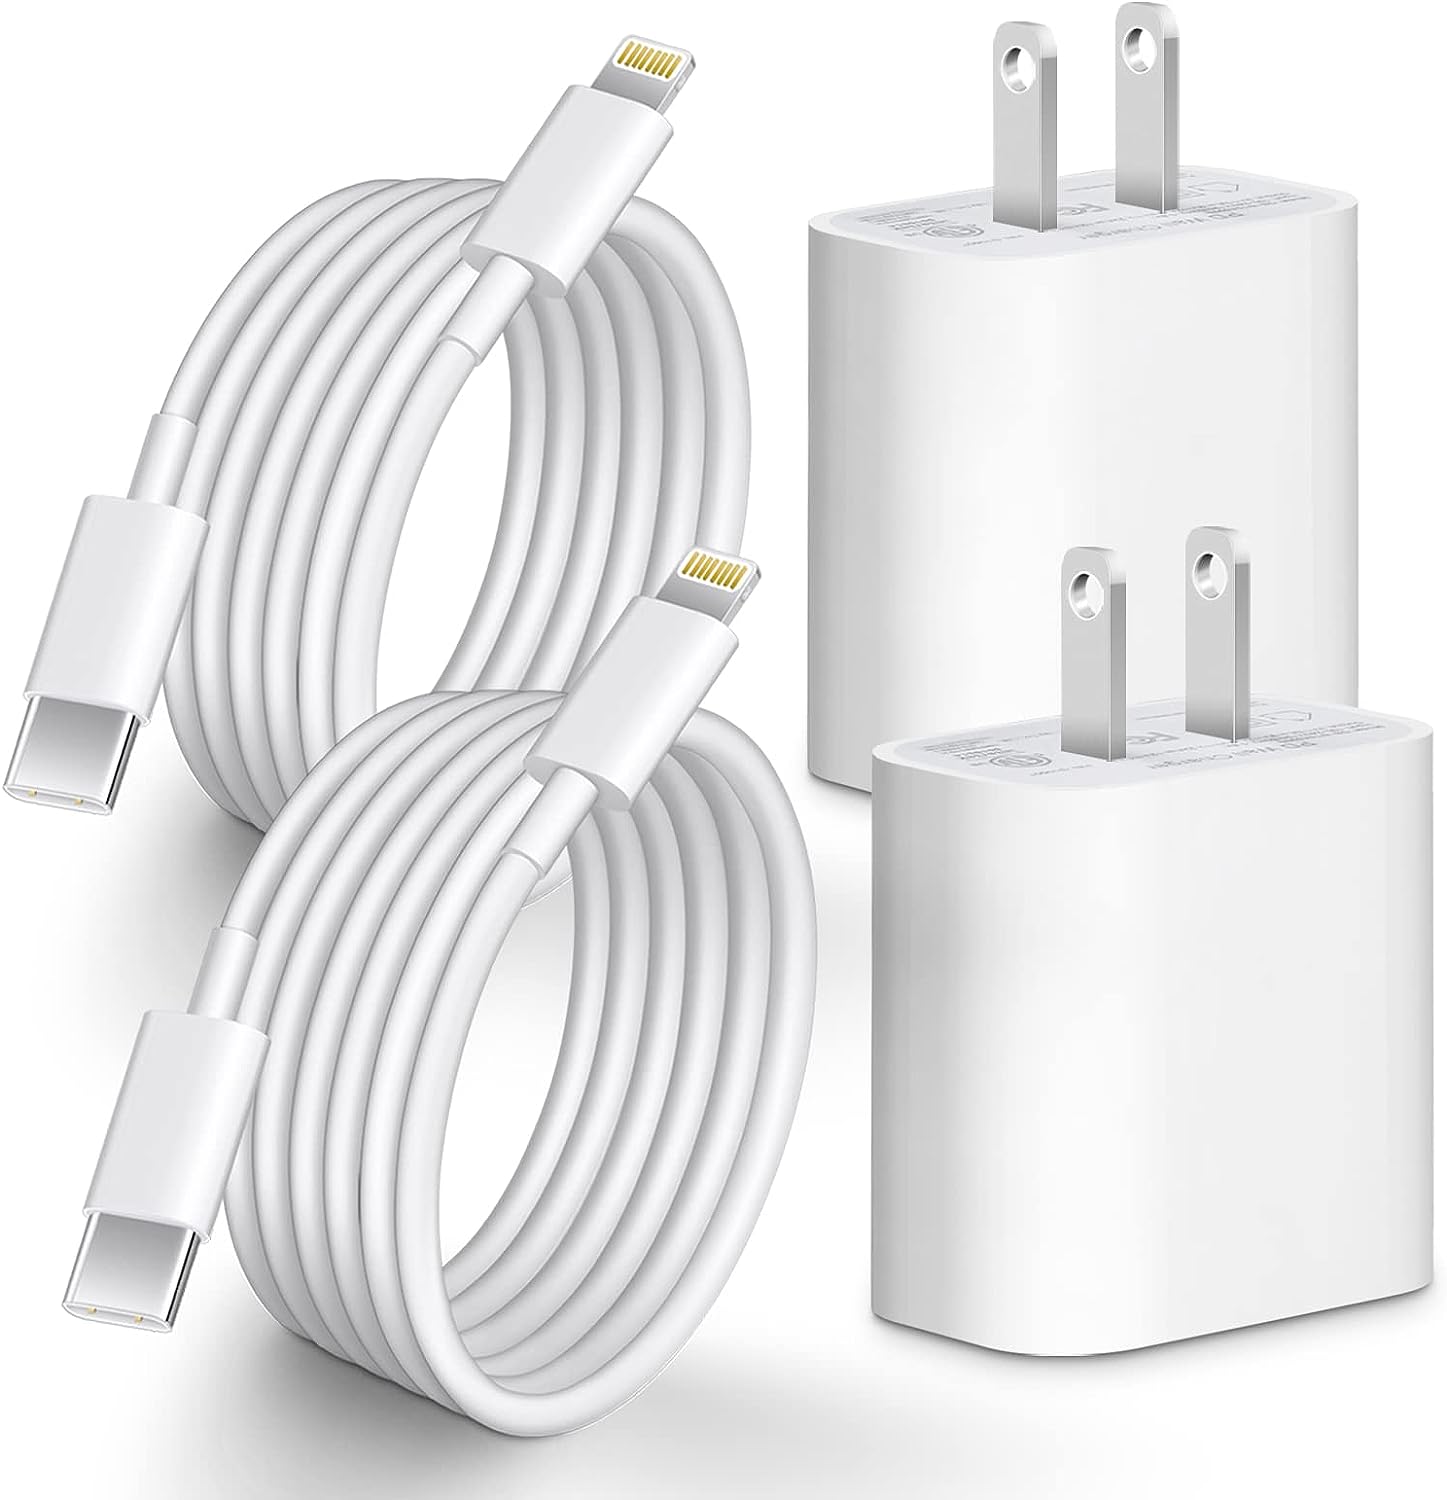 Cable Cargador Para iPhone 6, 7, 8, X, 11, 12,13 Certificado